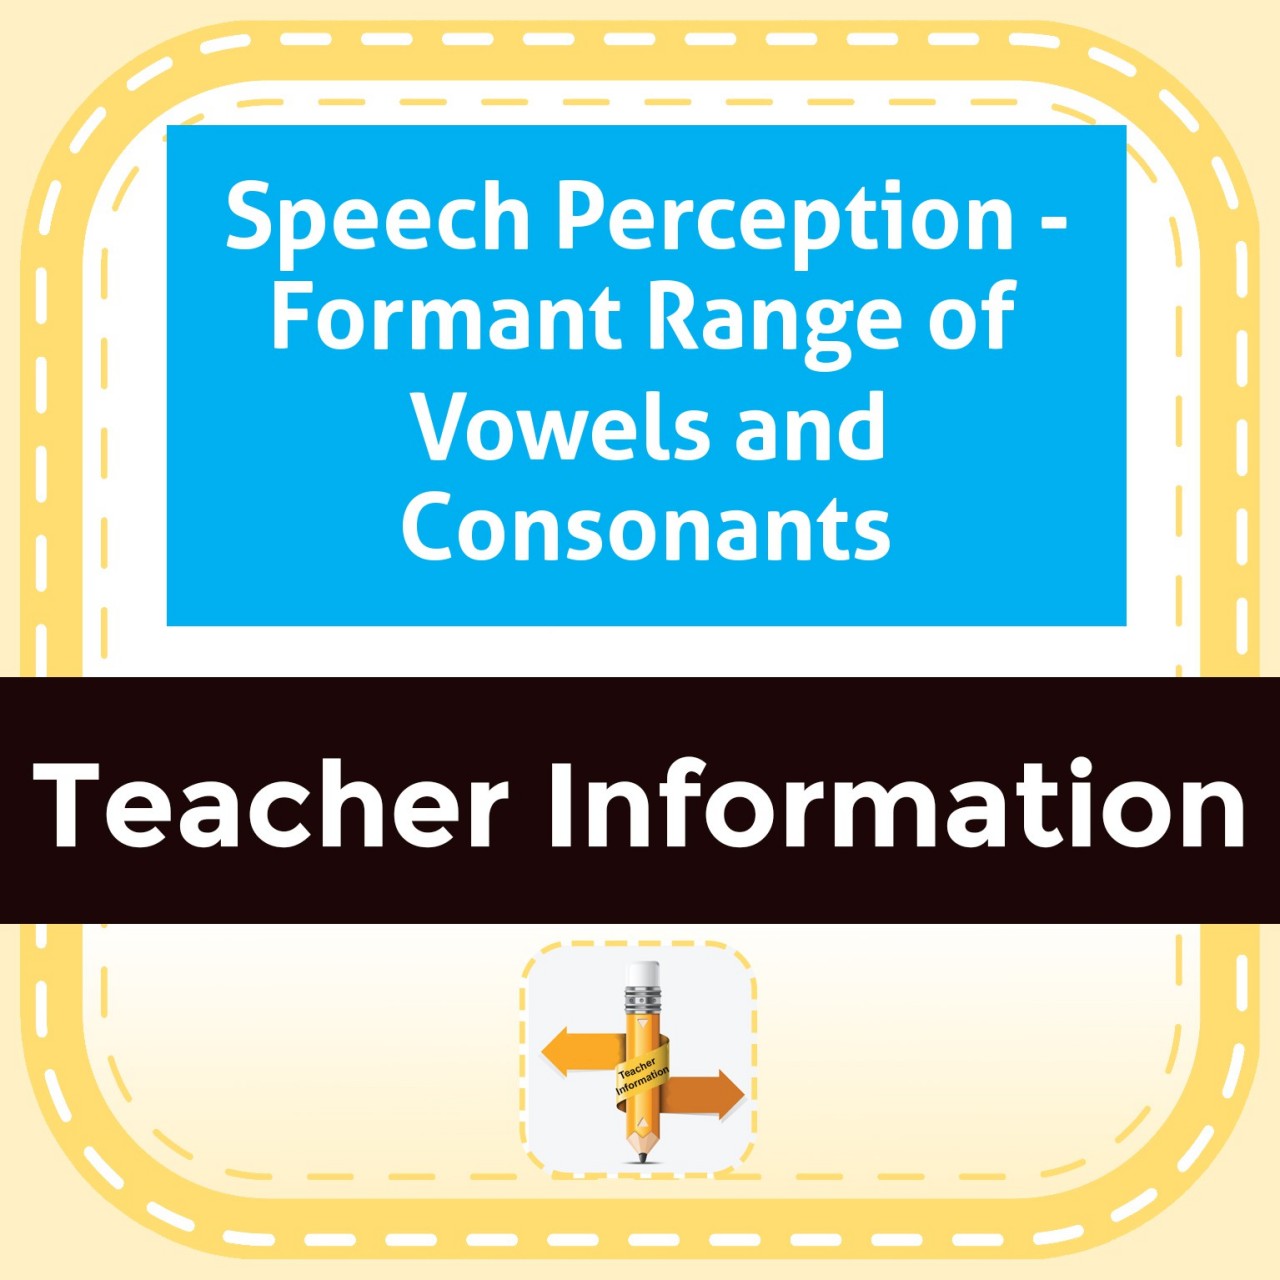 Speech Perception - Formant Range of Vowels and Consonants